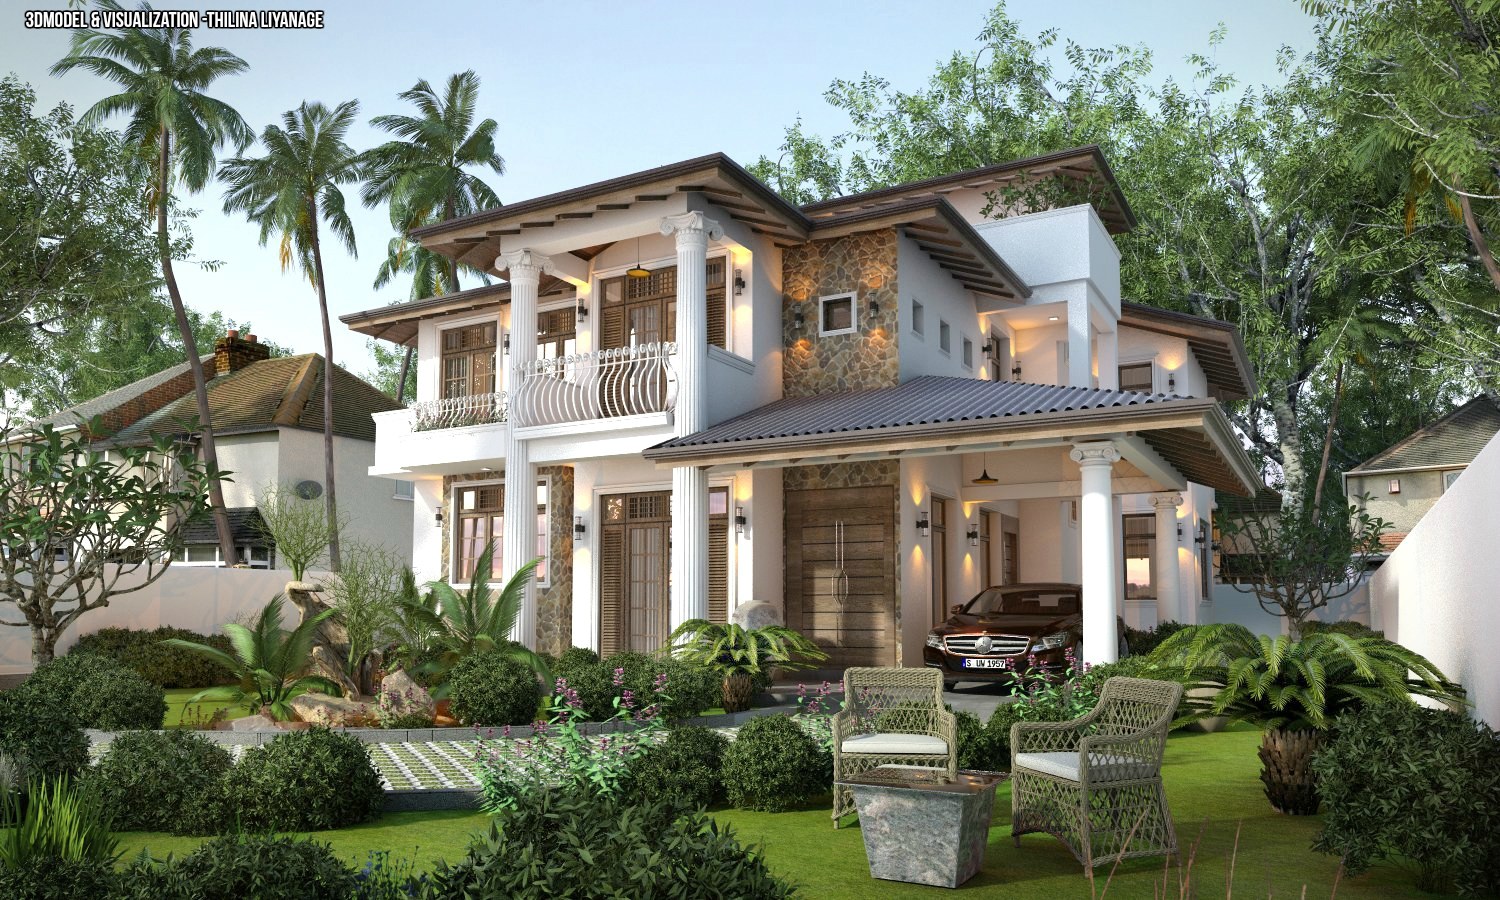 Proposed House At,Kottawa,Sri Lanka, Ground Floor-Car Porch,Sitting,Dining,2 Bed Rooms,Bath,Kitchen